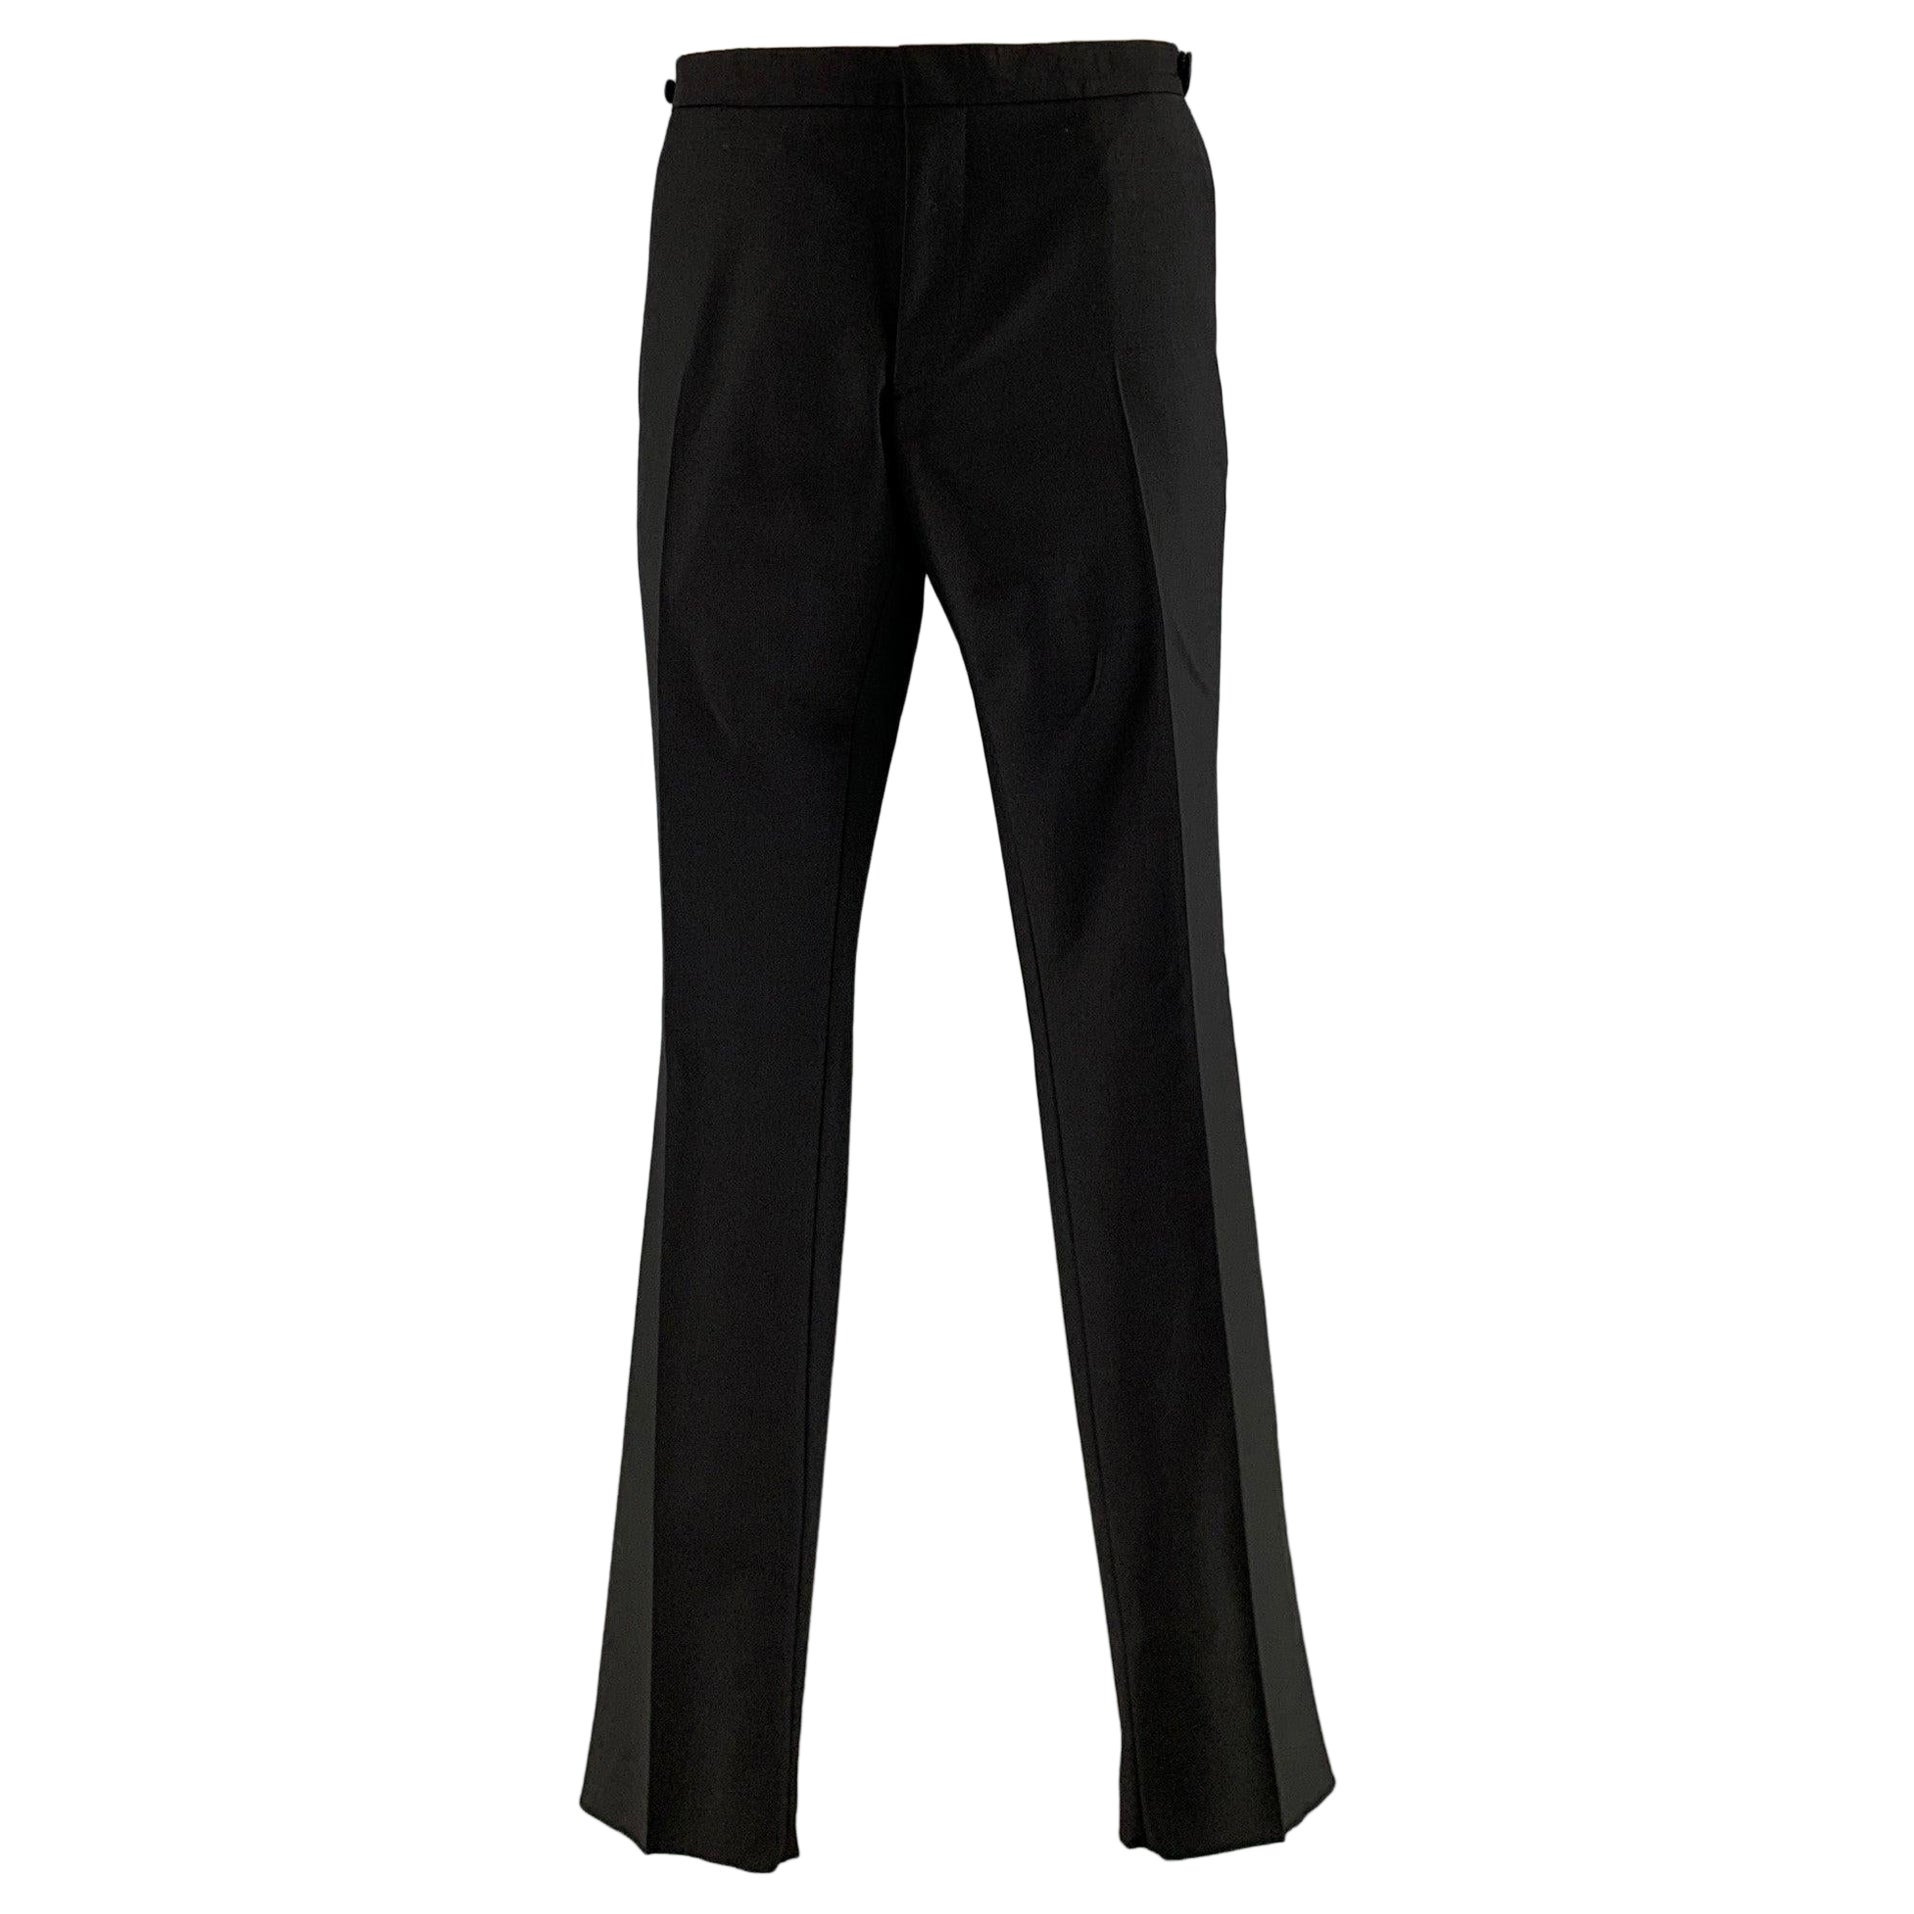 BURBERRY LONDON Size 34 Black Solid Cupro Cotton Tuxedo Dress Pants For Sale